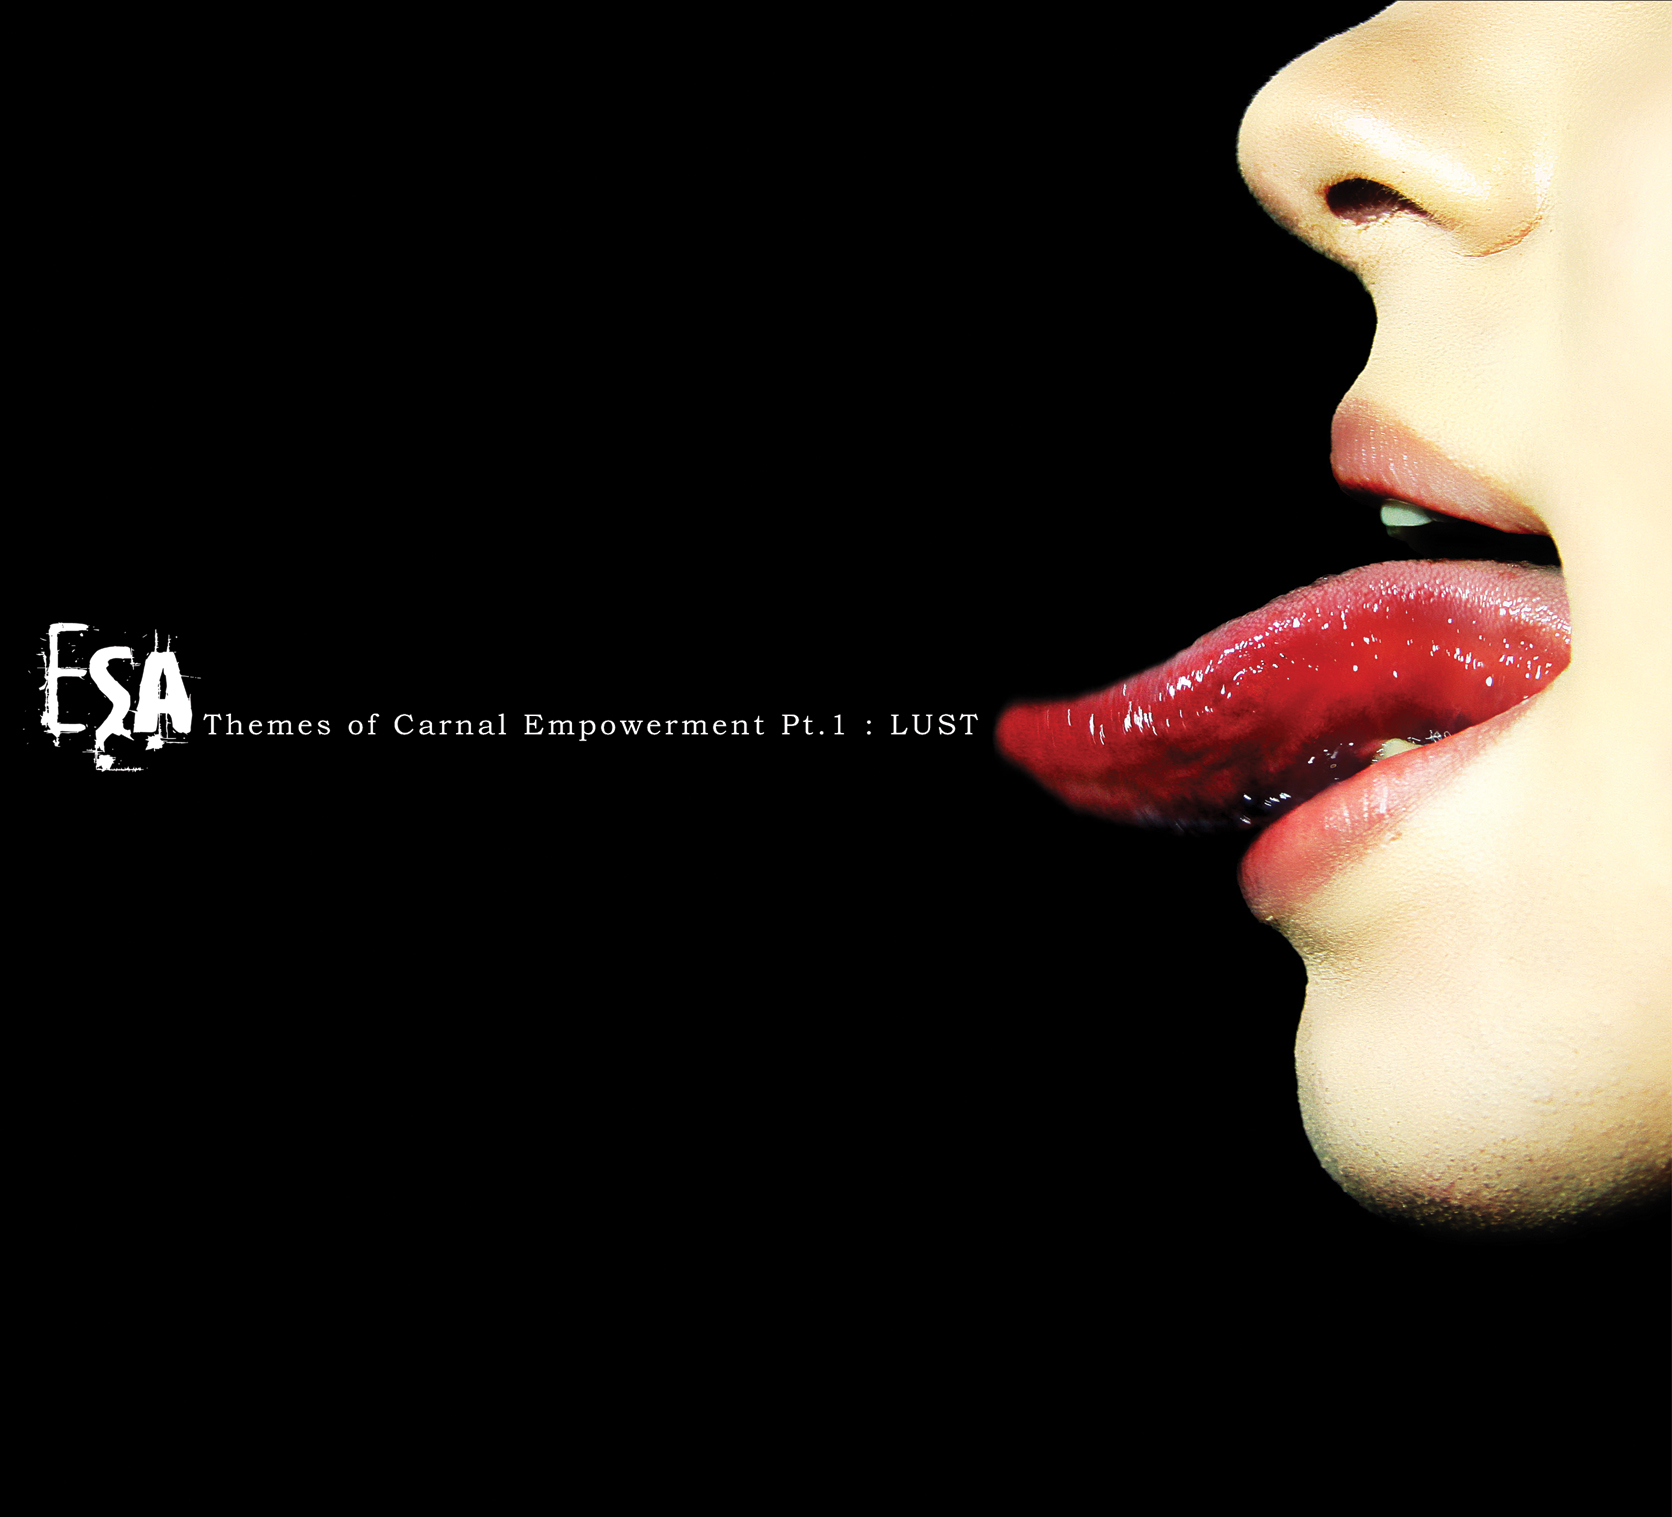 Esa Themes Of Carnal Empowerment Part 1 Lust I Die You Die 